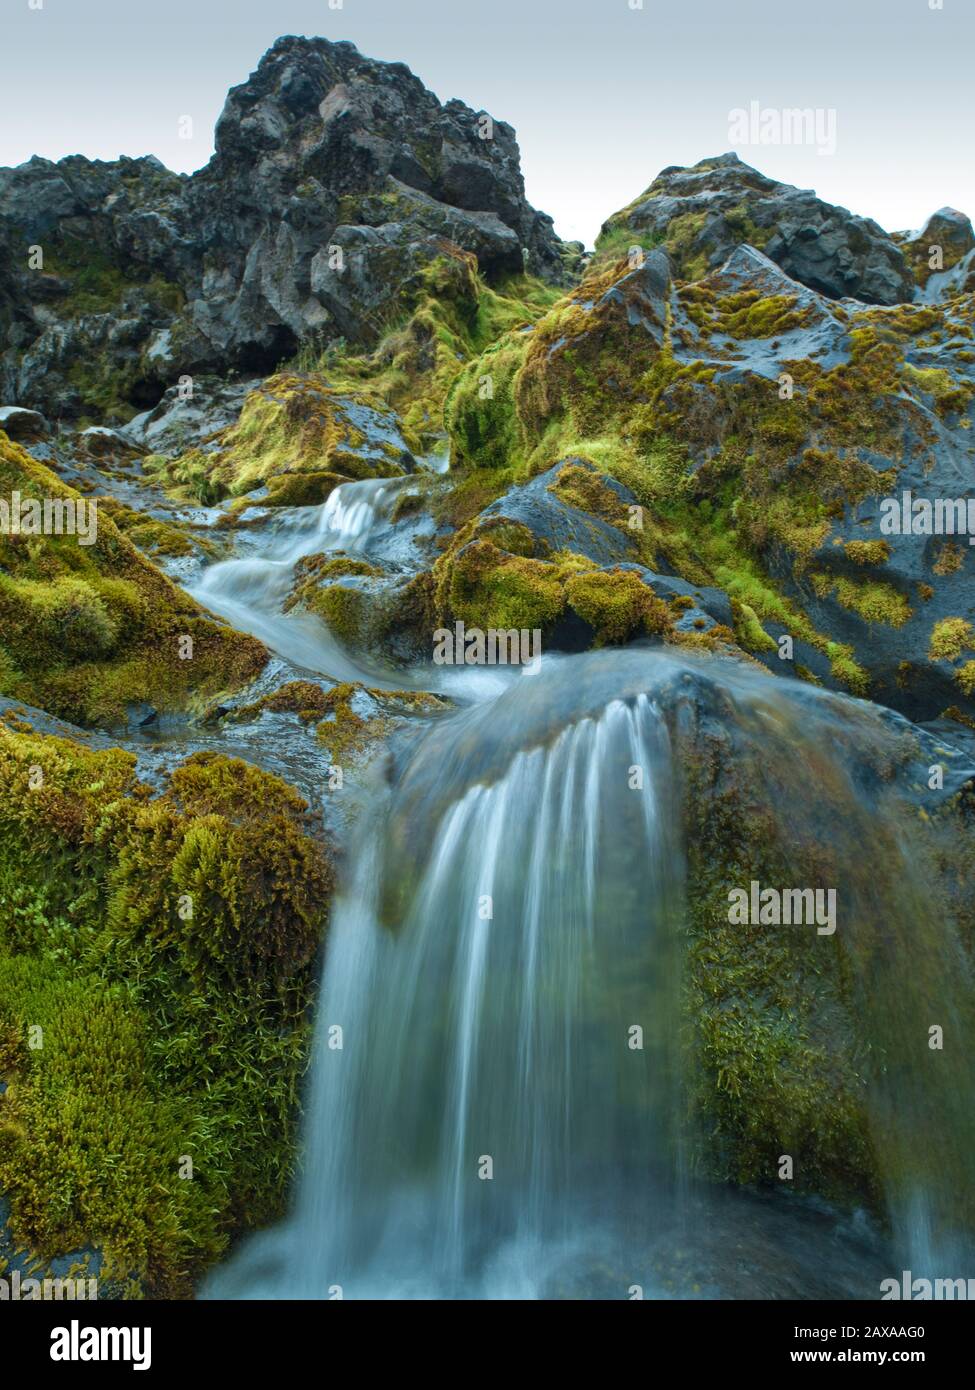 Cascadas - agua potable y musgo, Islandia Foto de stock